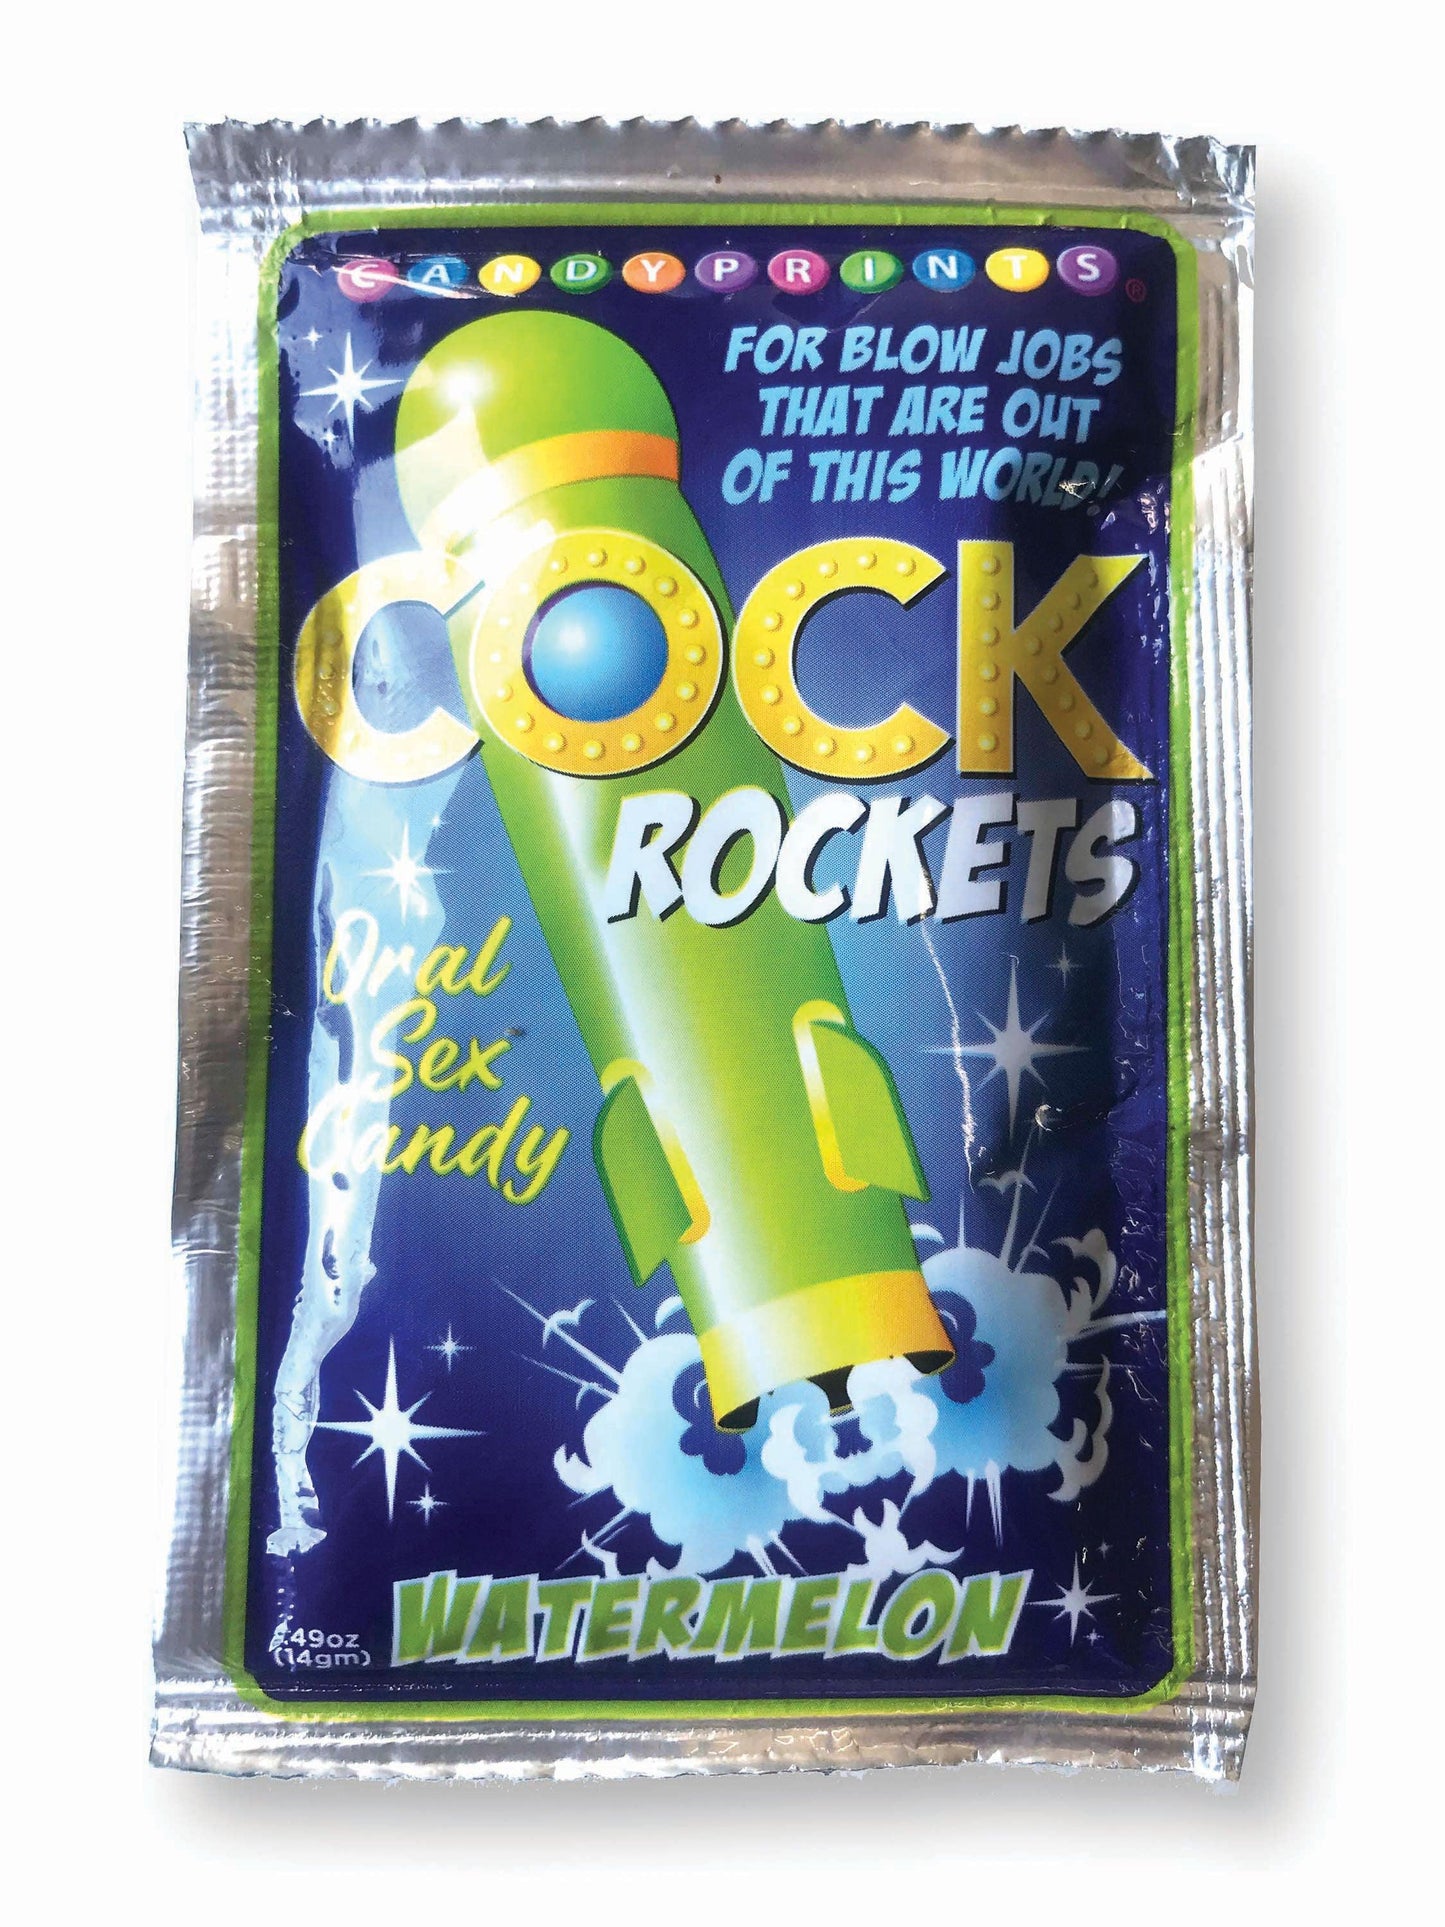 Cock Rockets Display of 36 - My Sex Toy Hub